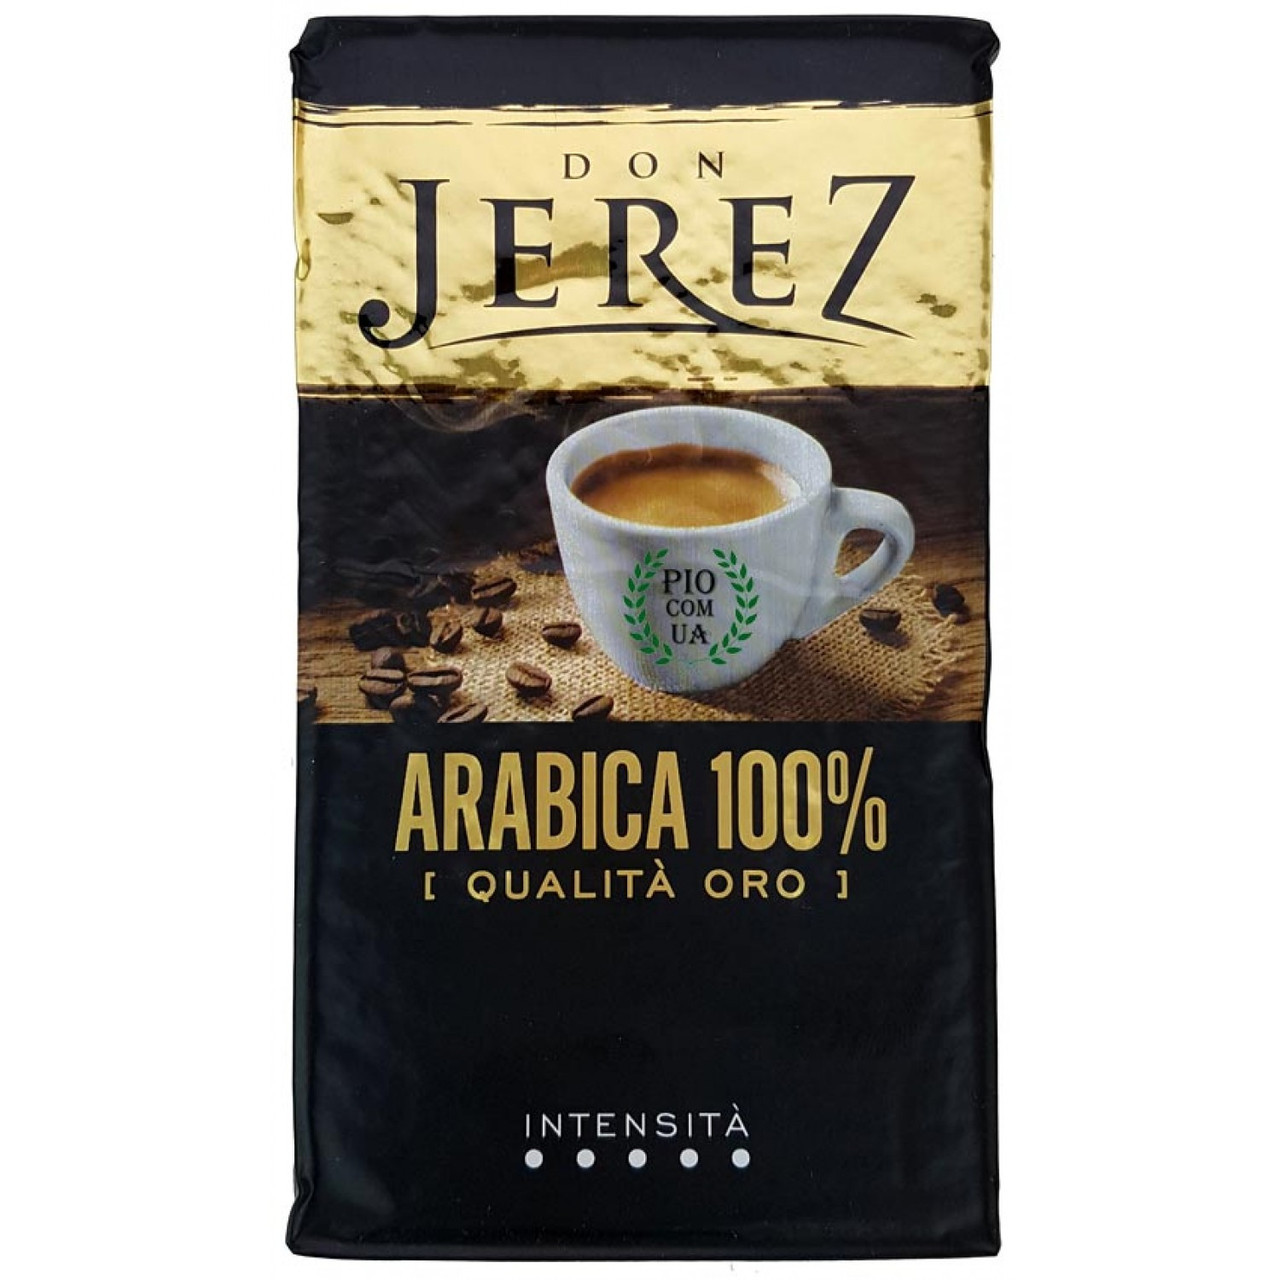 Don Jerez Arabica 100%